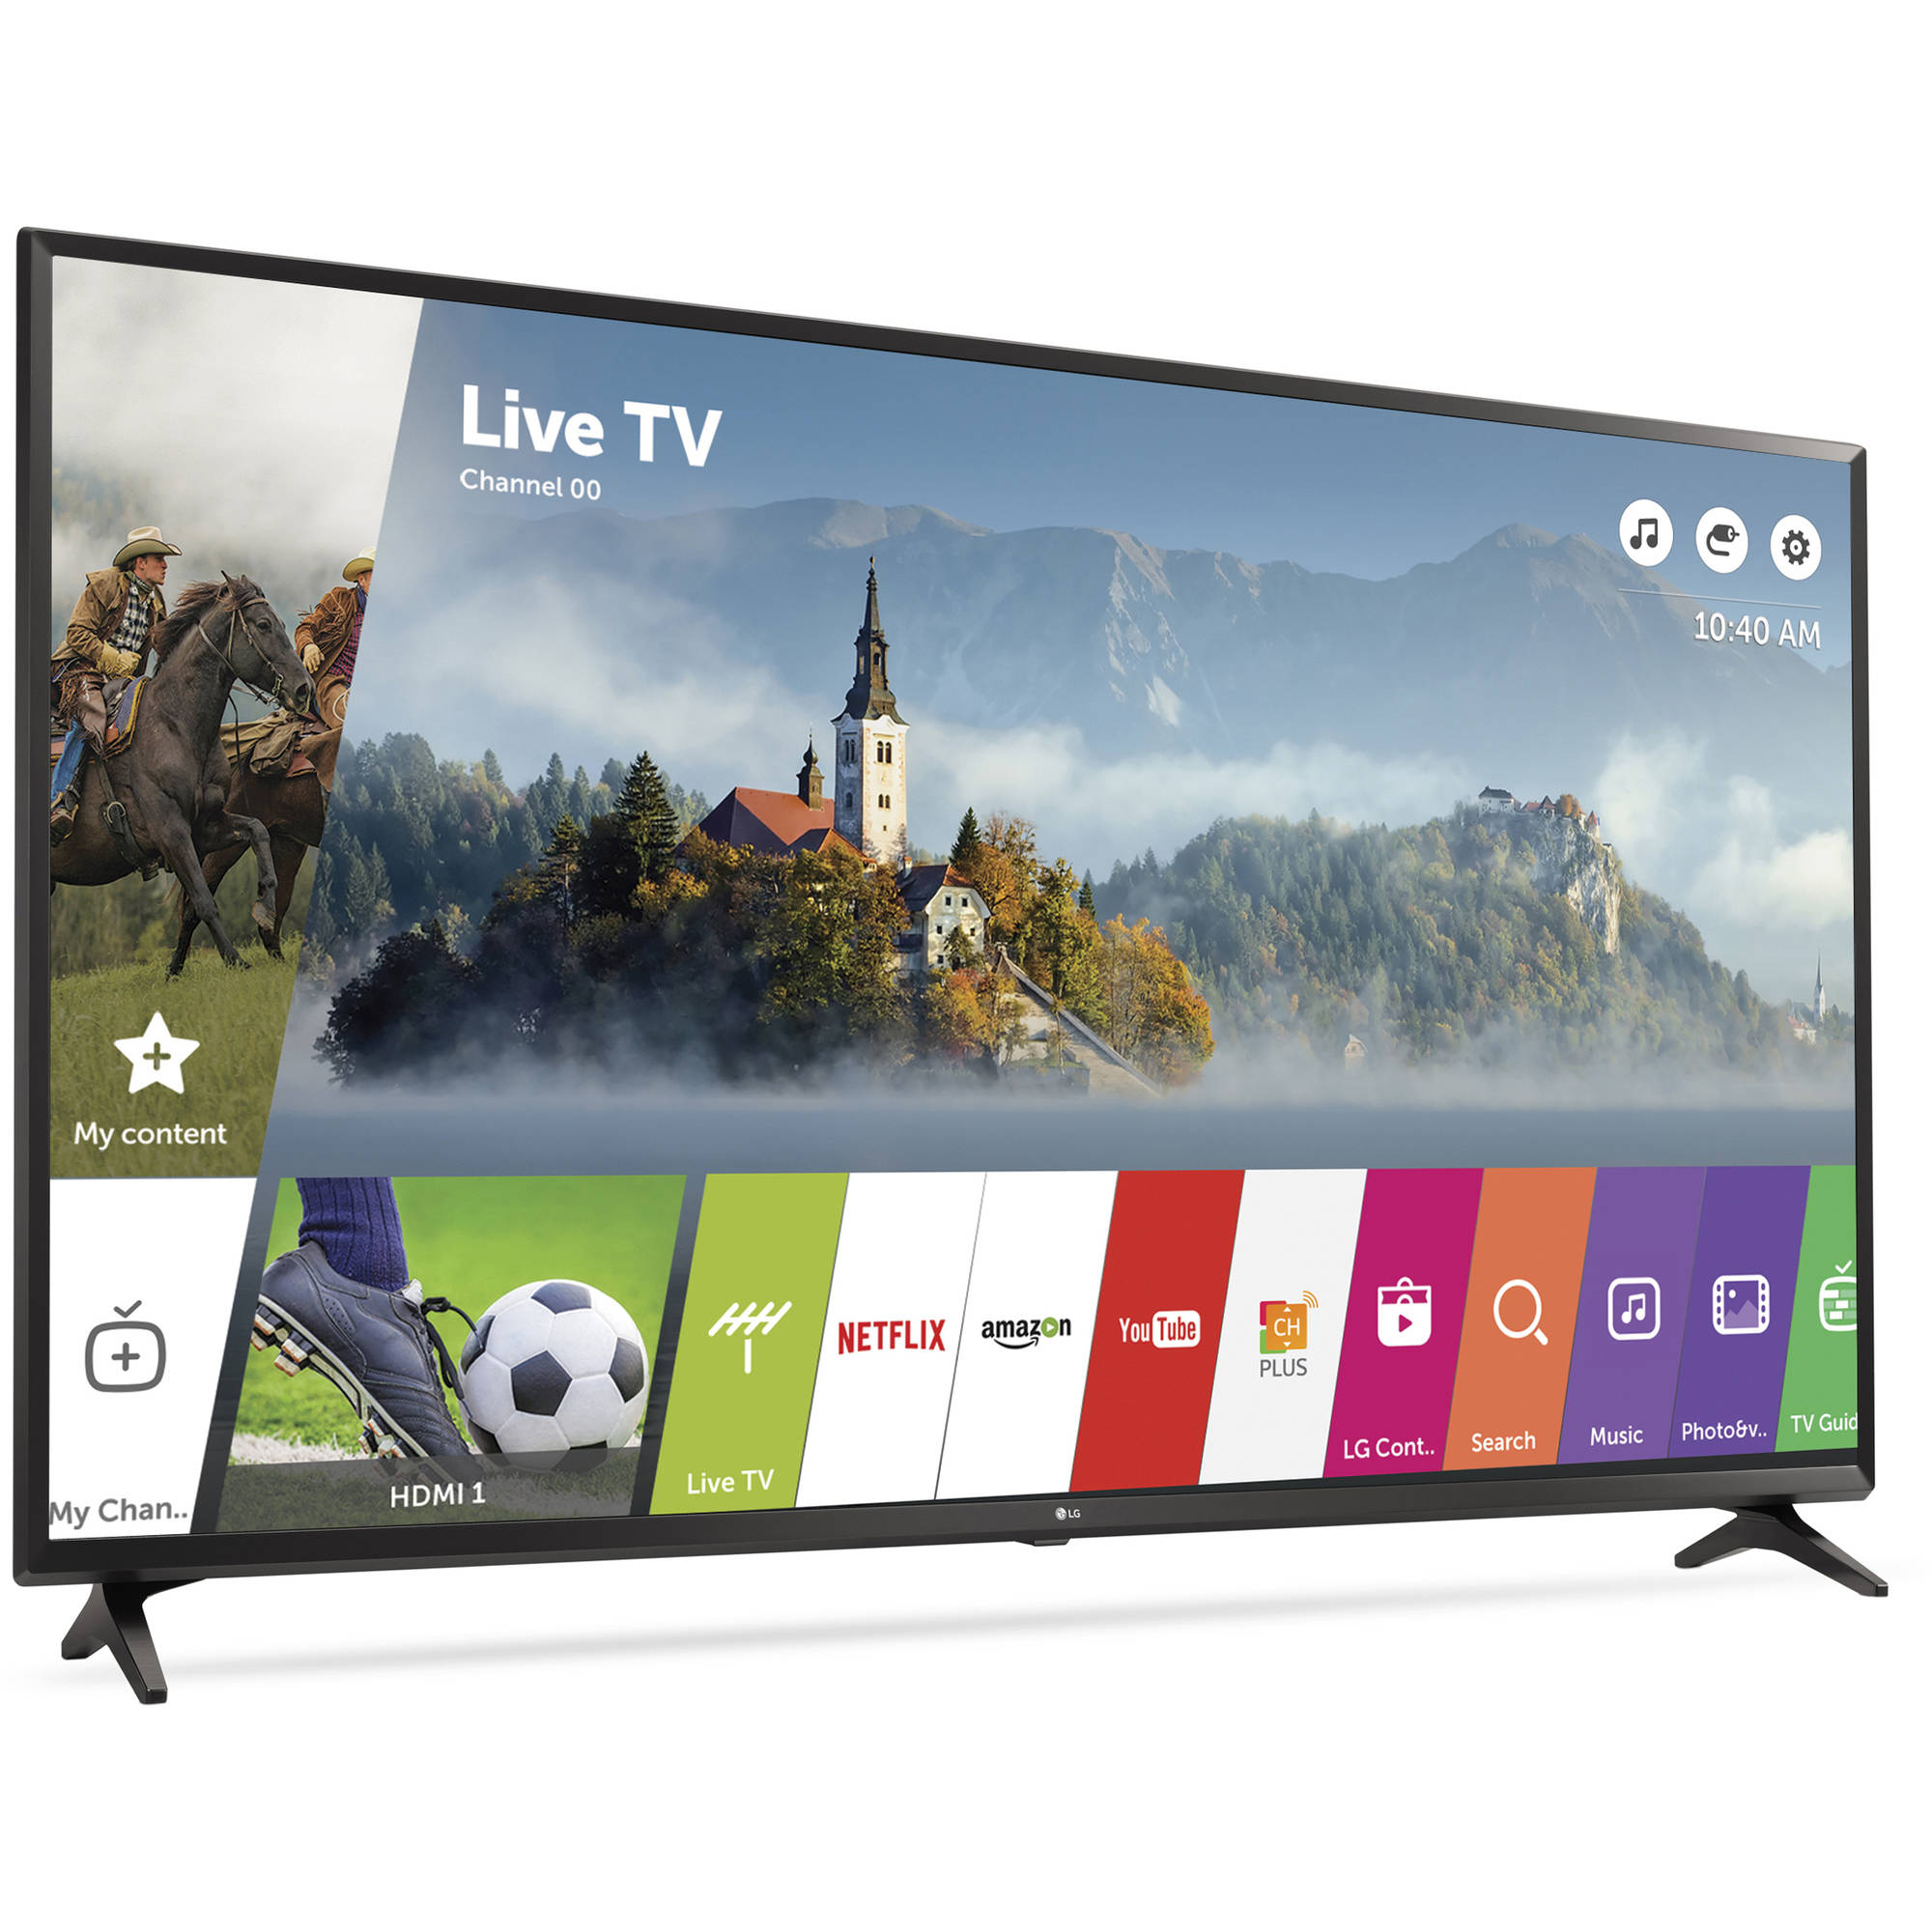 LG 49" Class 4K Ultra HD (2160P) Smart LED TV (49UJ6300) - image 2 of 12